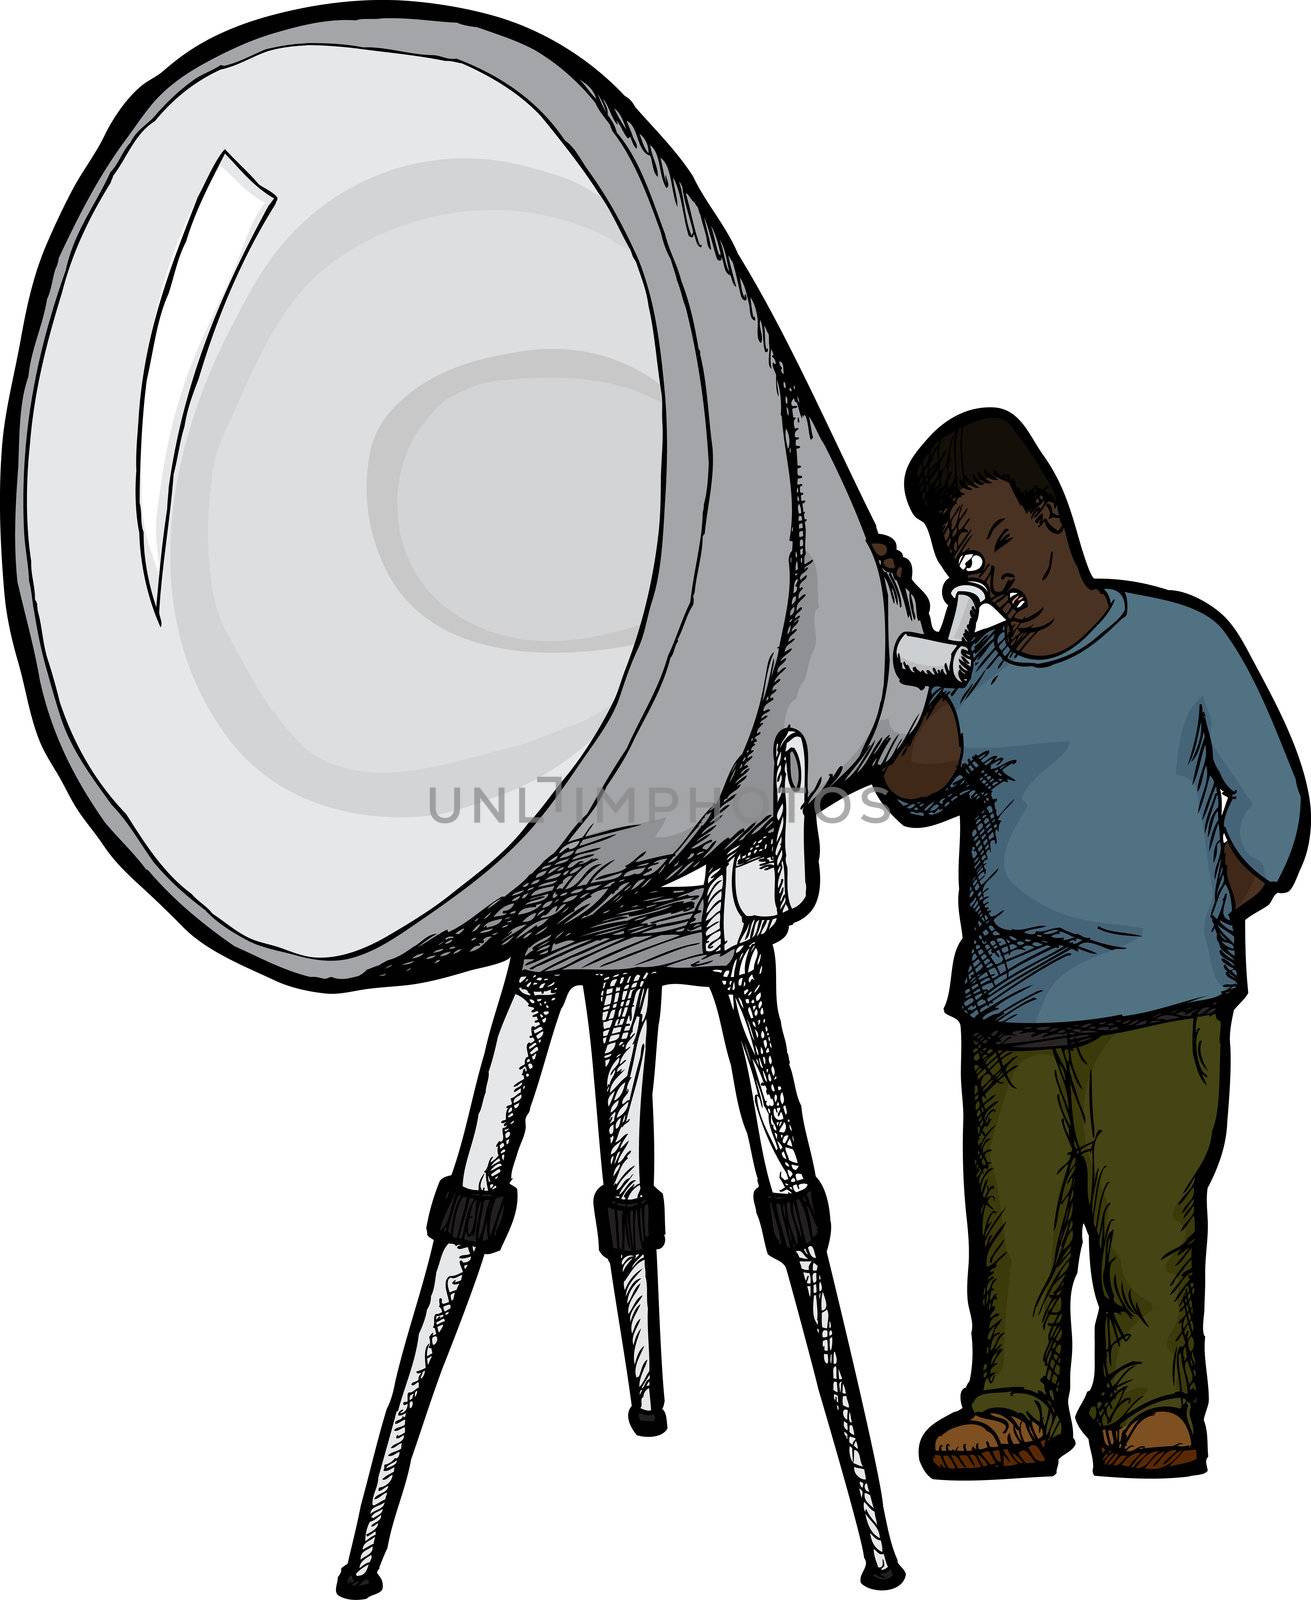 Man With Telescope by TheBlackRhino